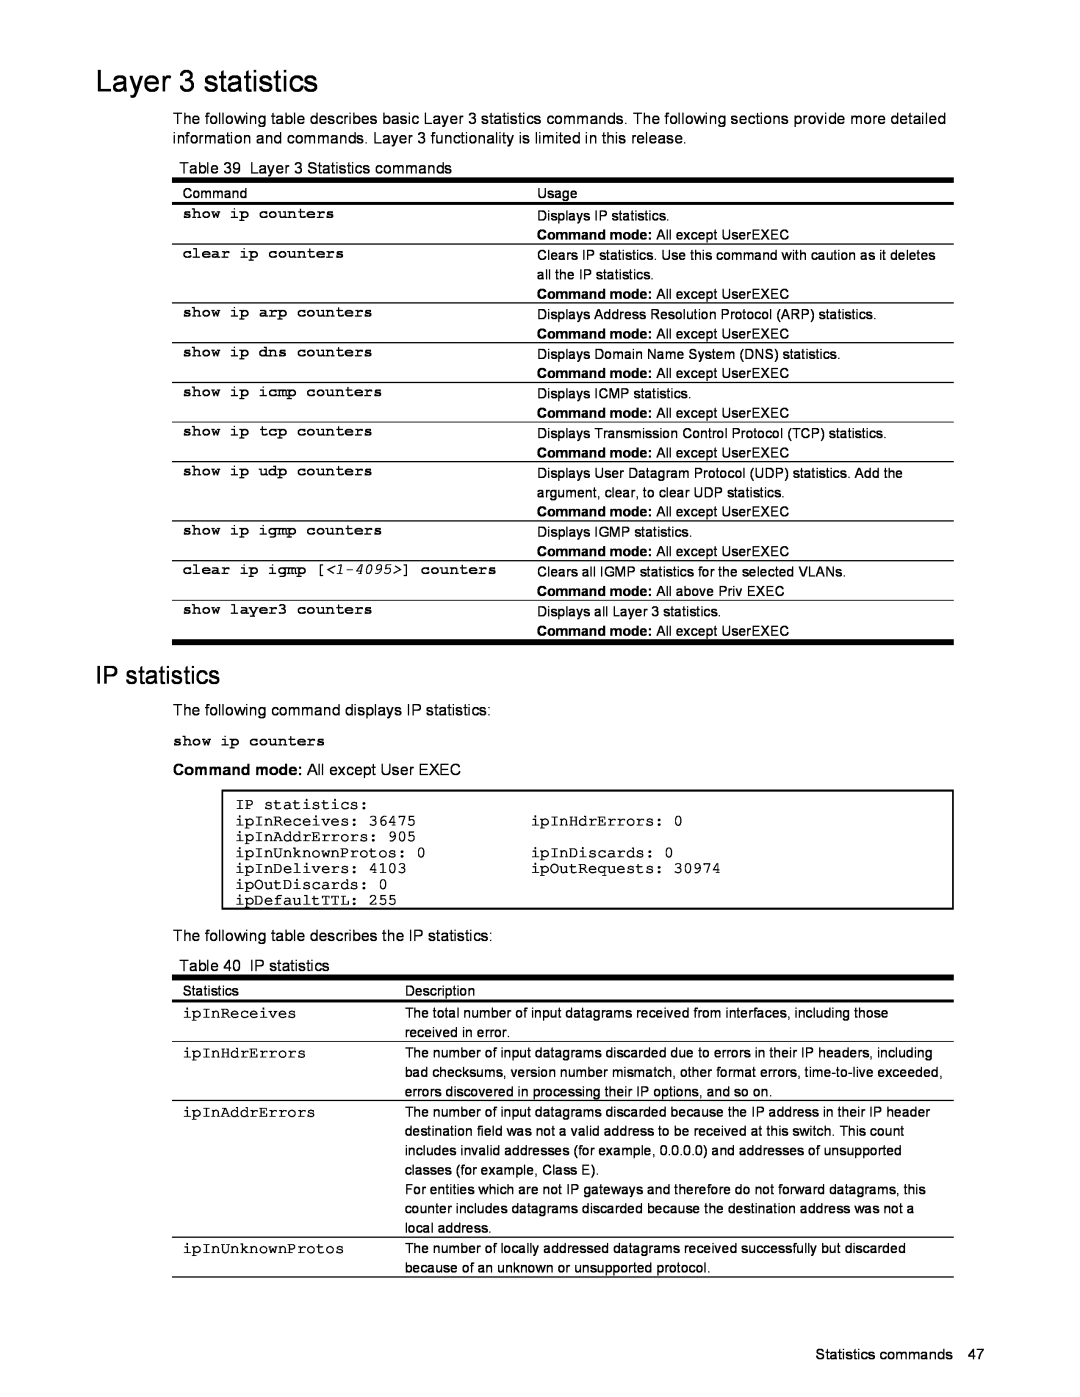 NEC N8406-022 manual Layer 3 statistics, IP statistics 